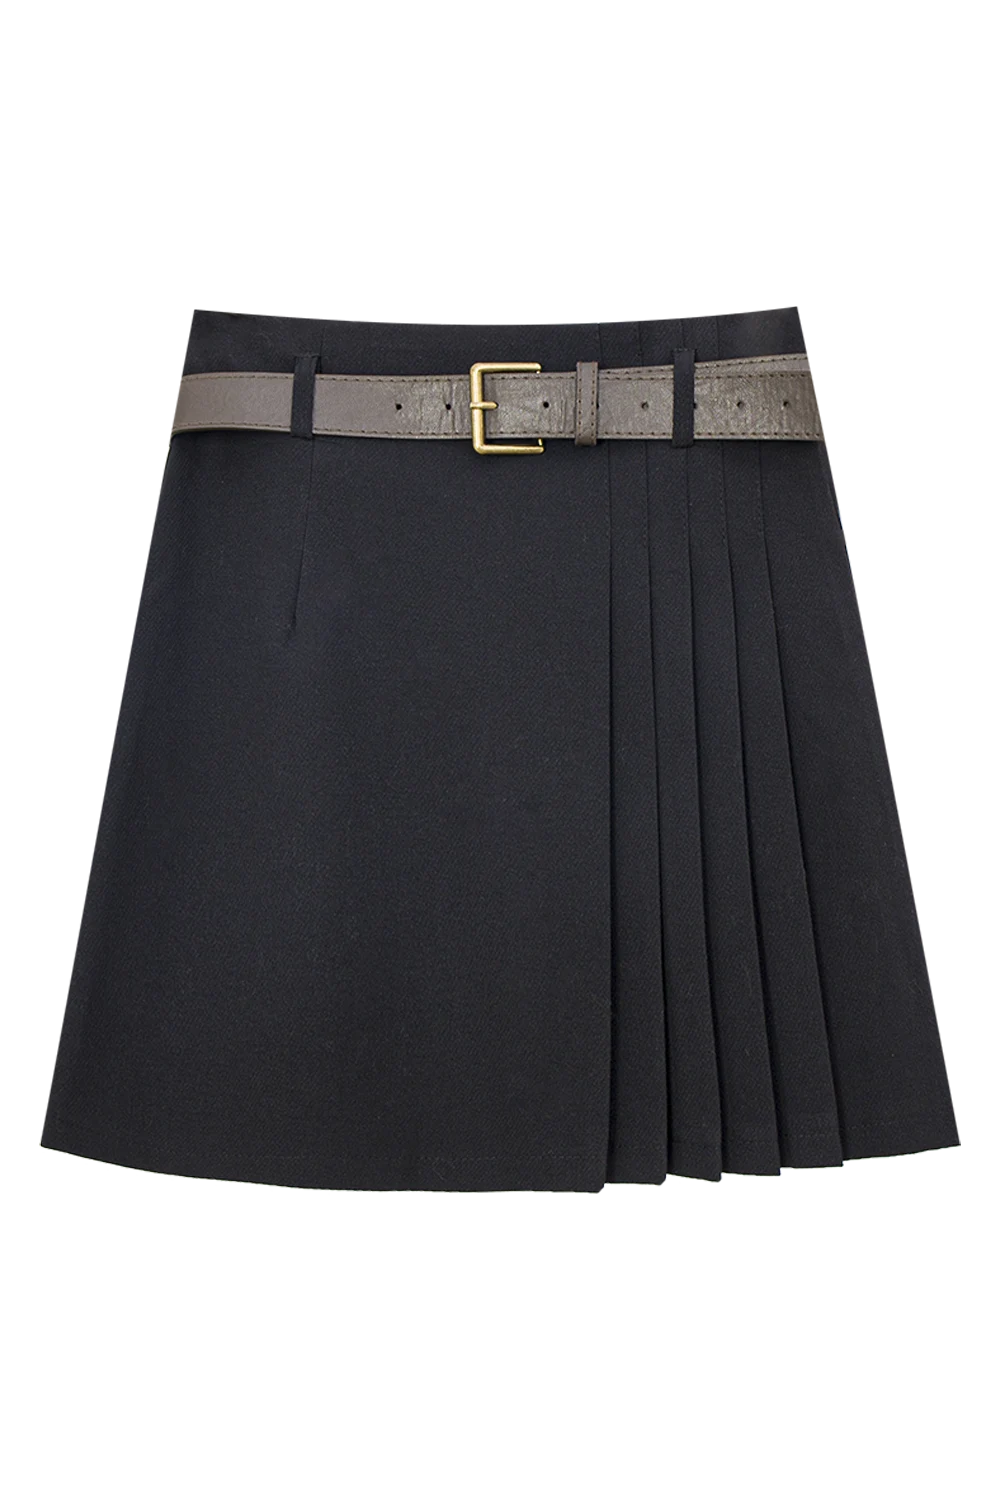 Pleated Mini Skirt with Metal Buckle Belt